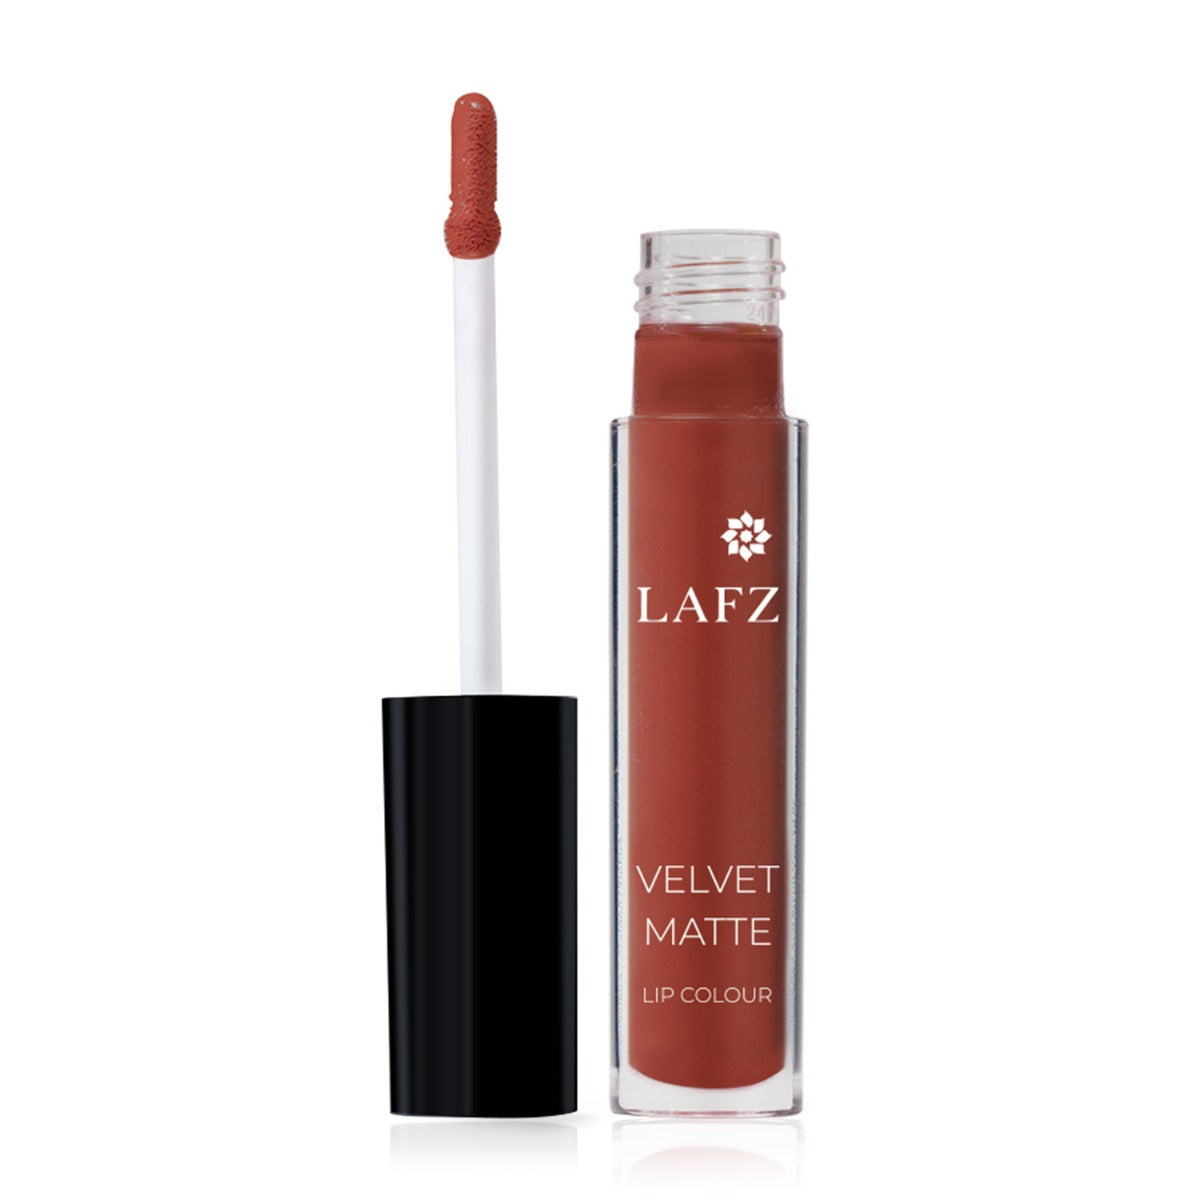 Lafz Velvet Matte Lip Color (5.5g)